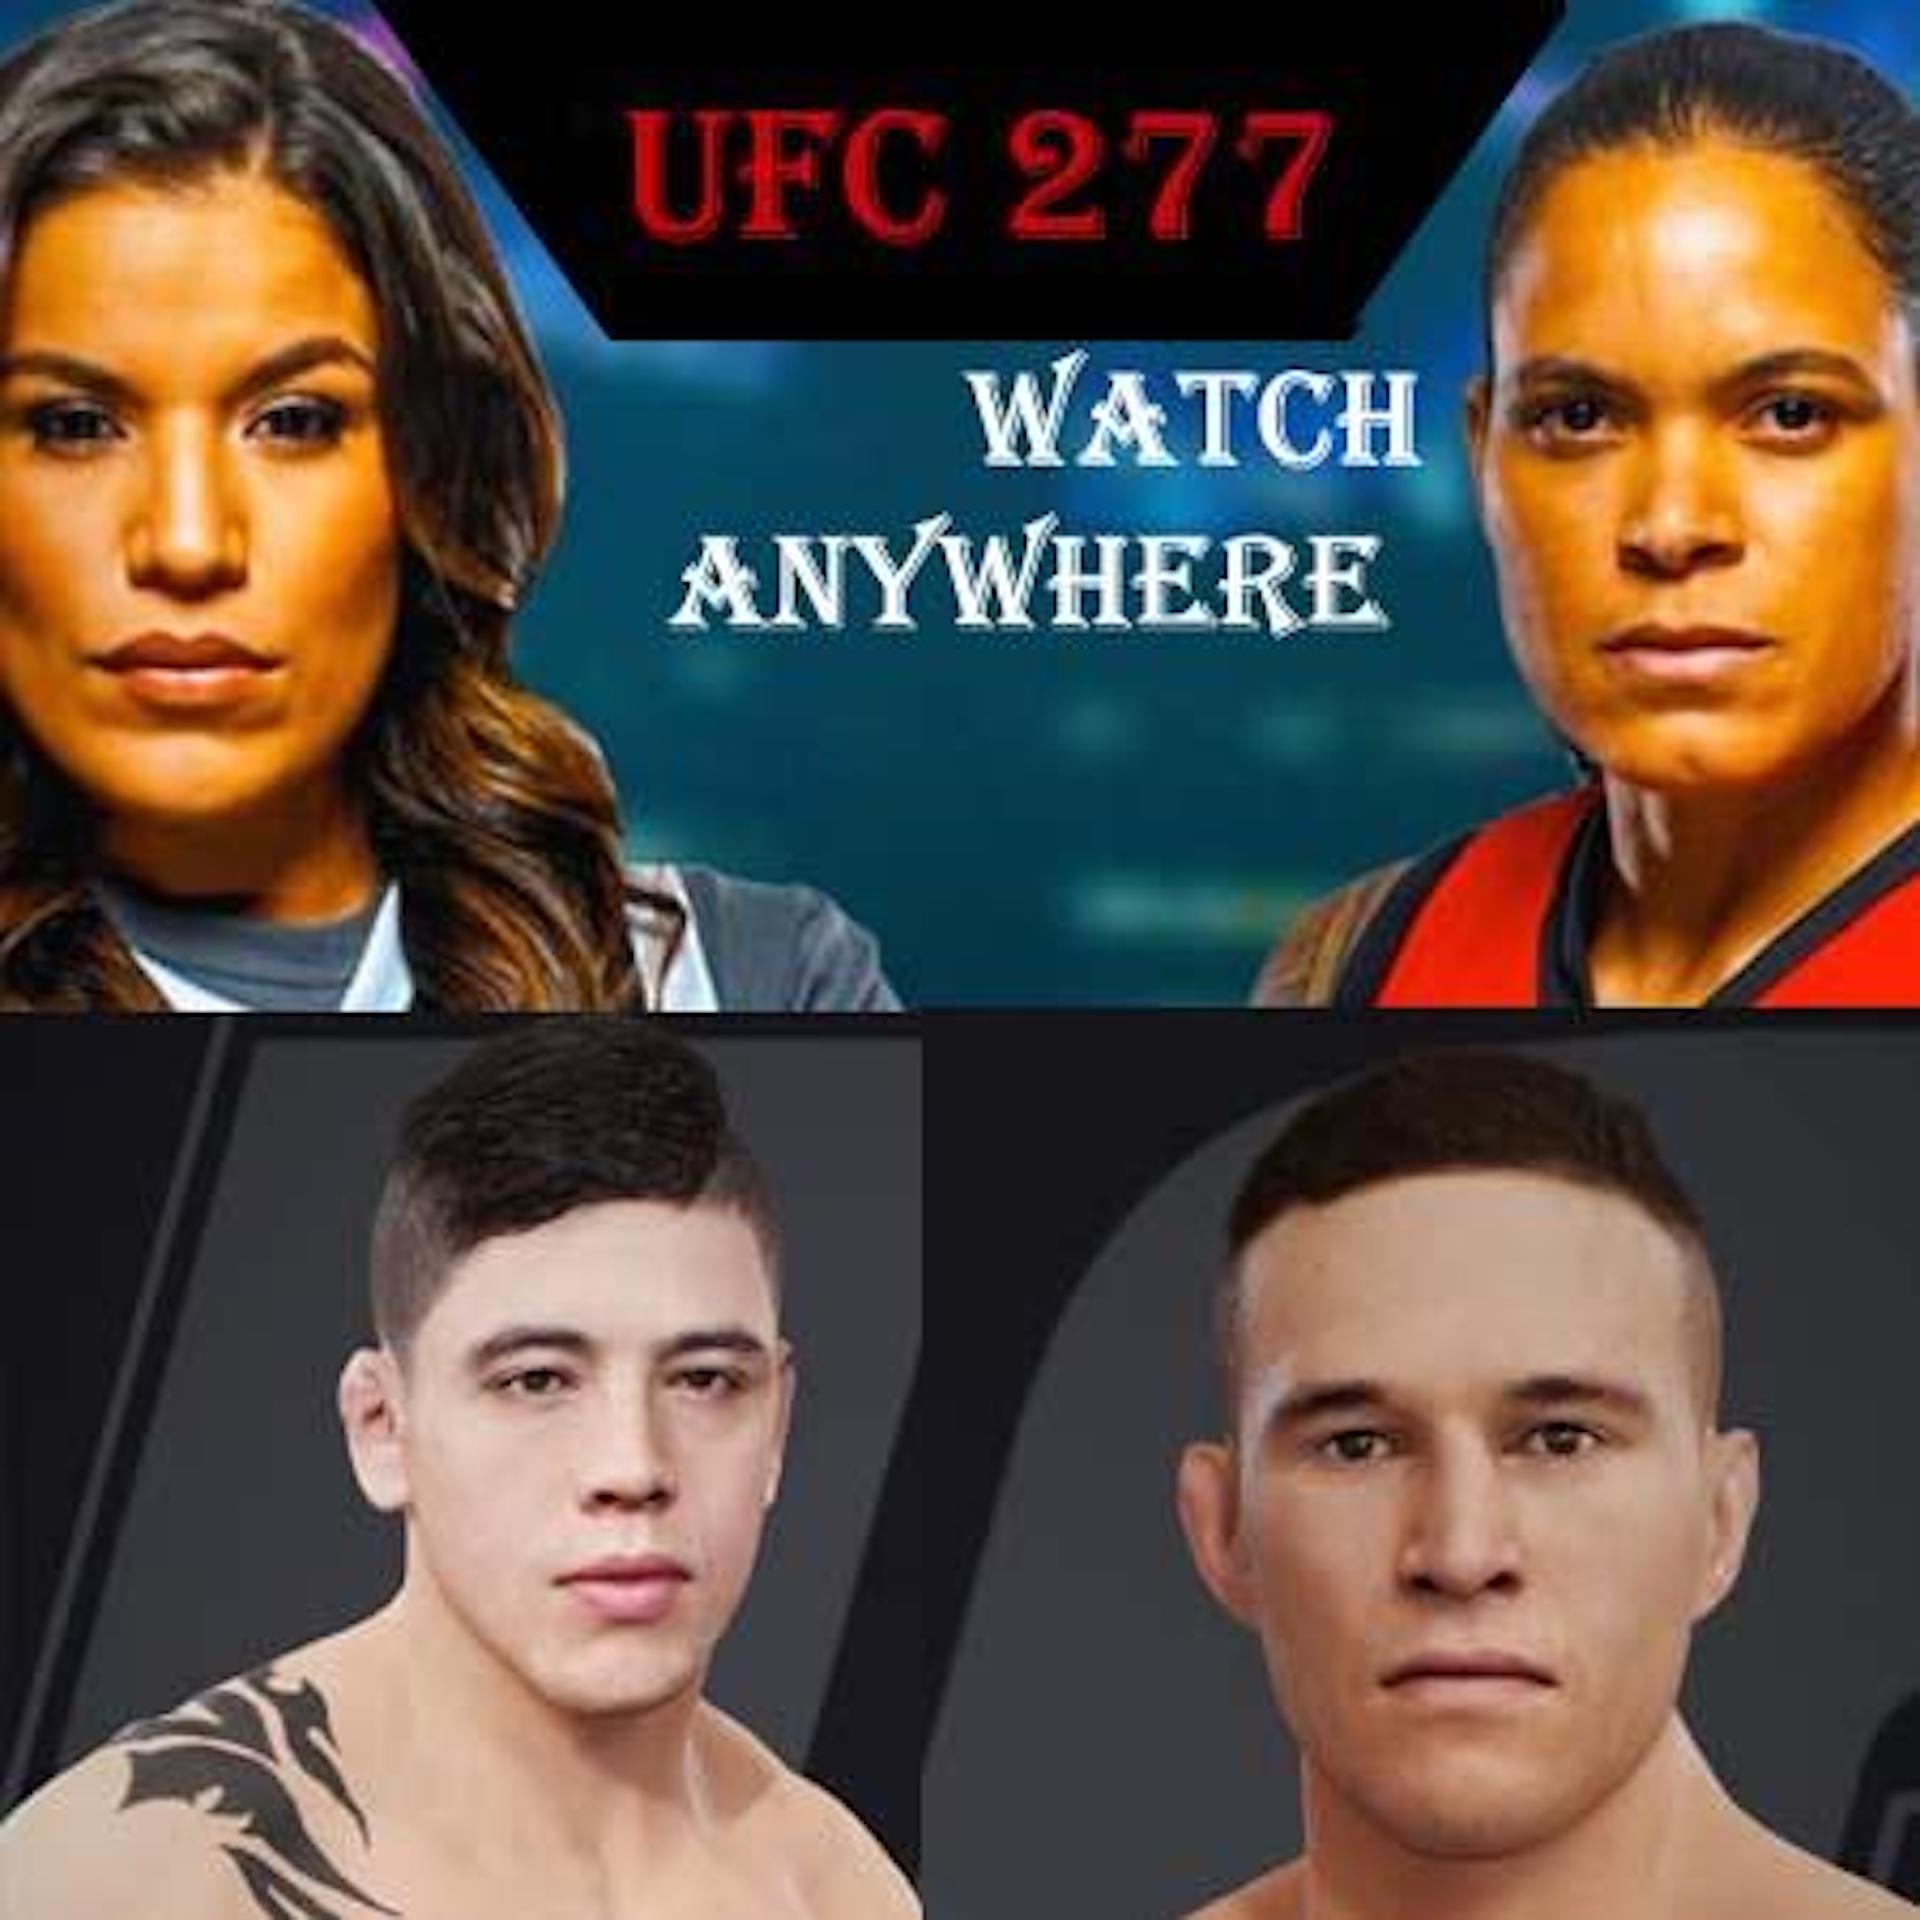 “UFC 277” live stream free on reddit & crackstreams online Film Daily